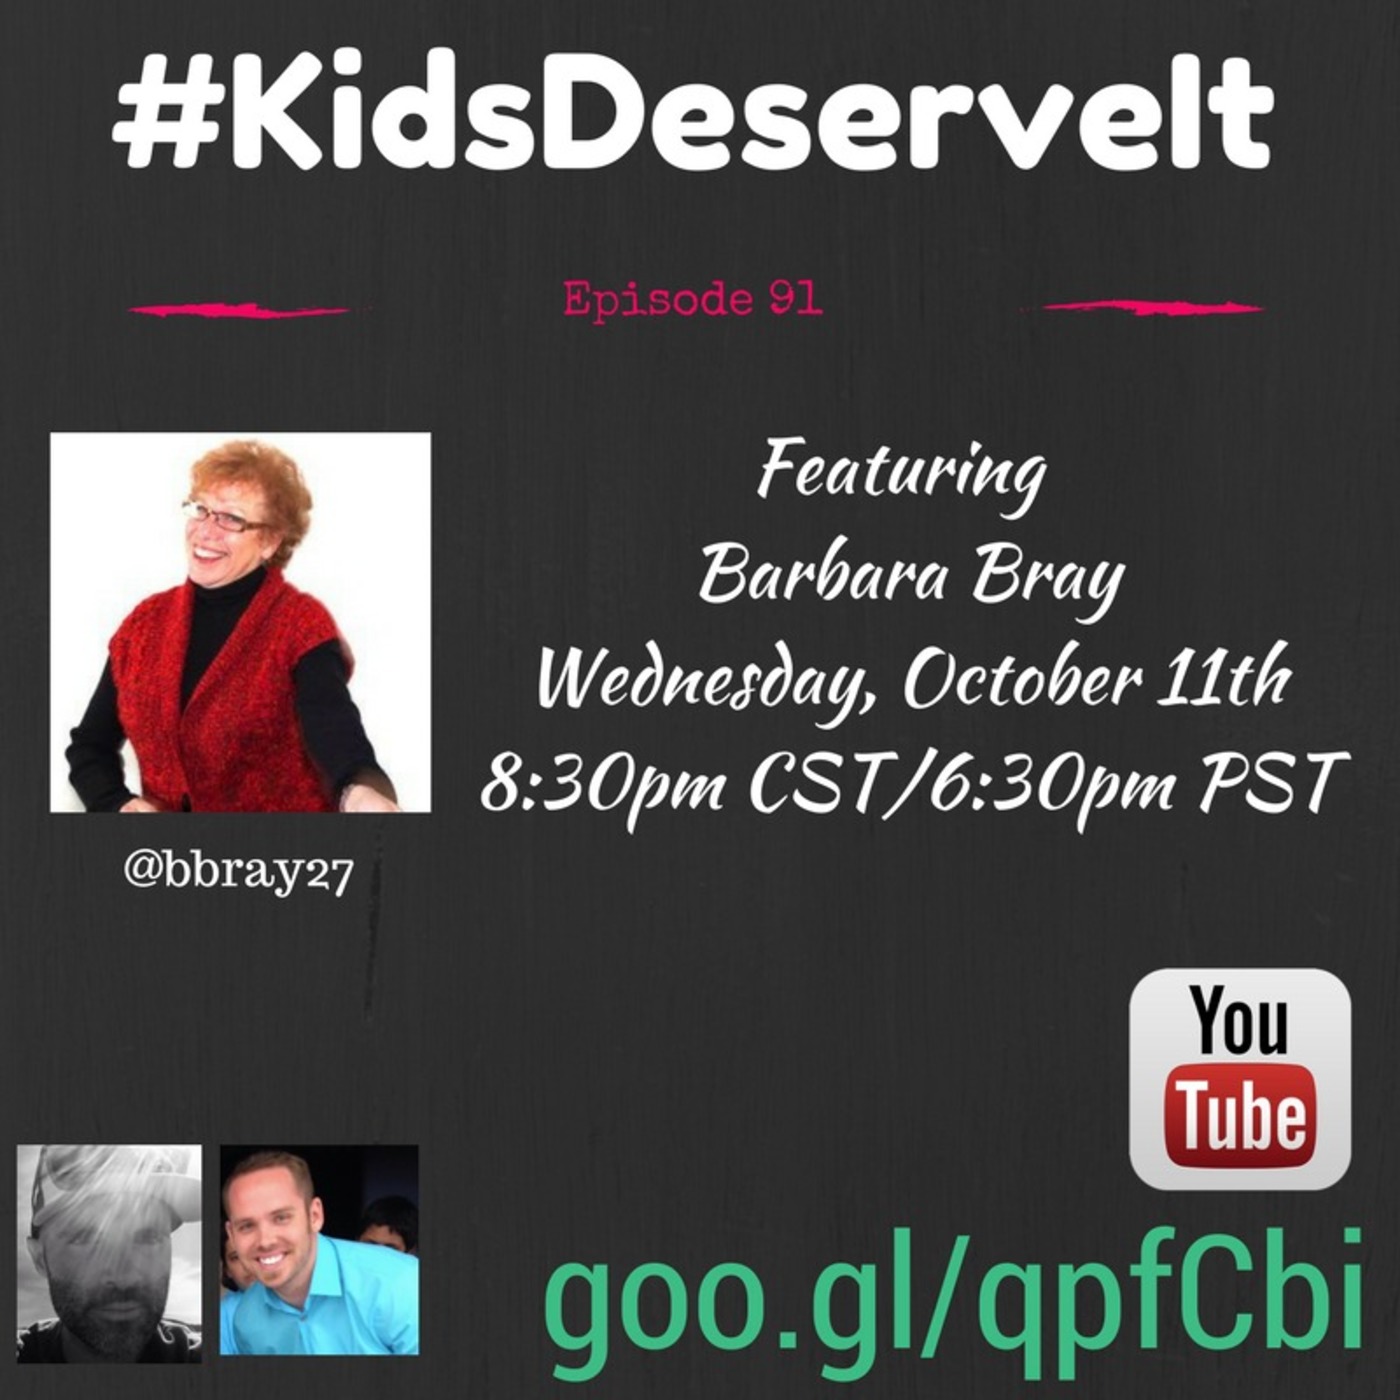 Episode 91 of #KidsDeserveIt with Barbara Bray